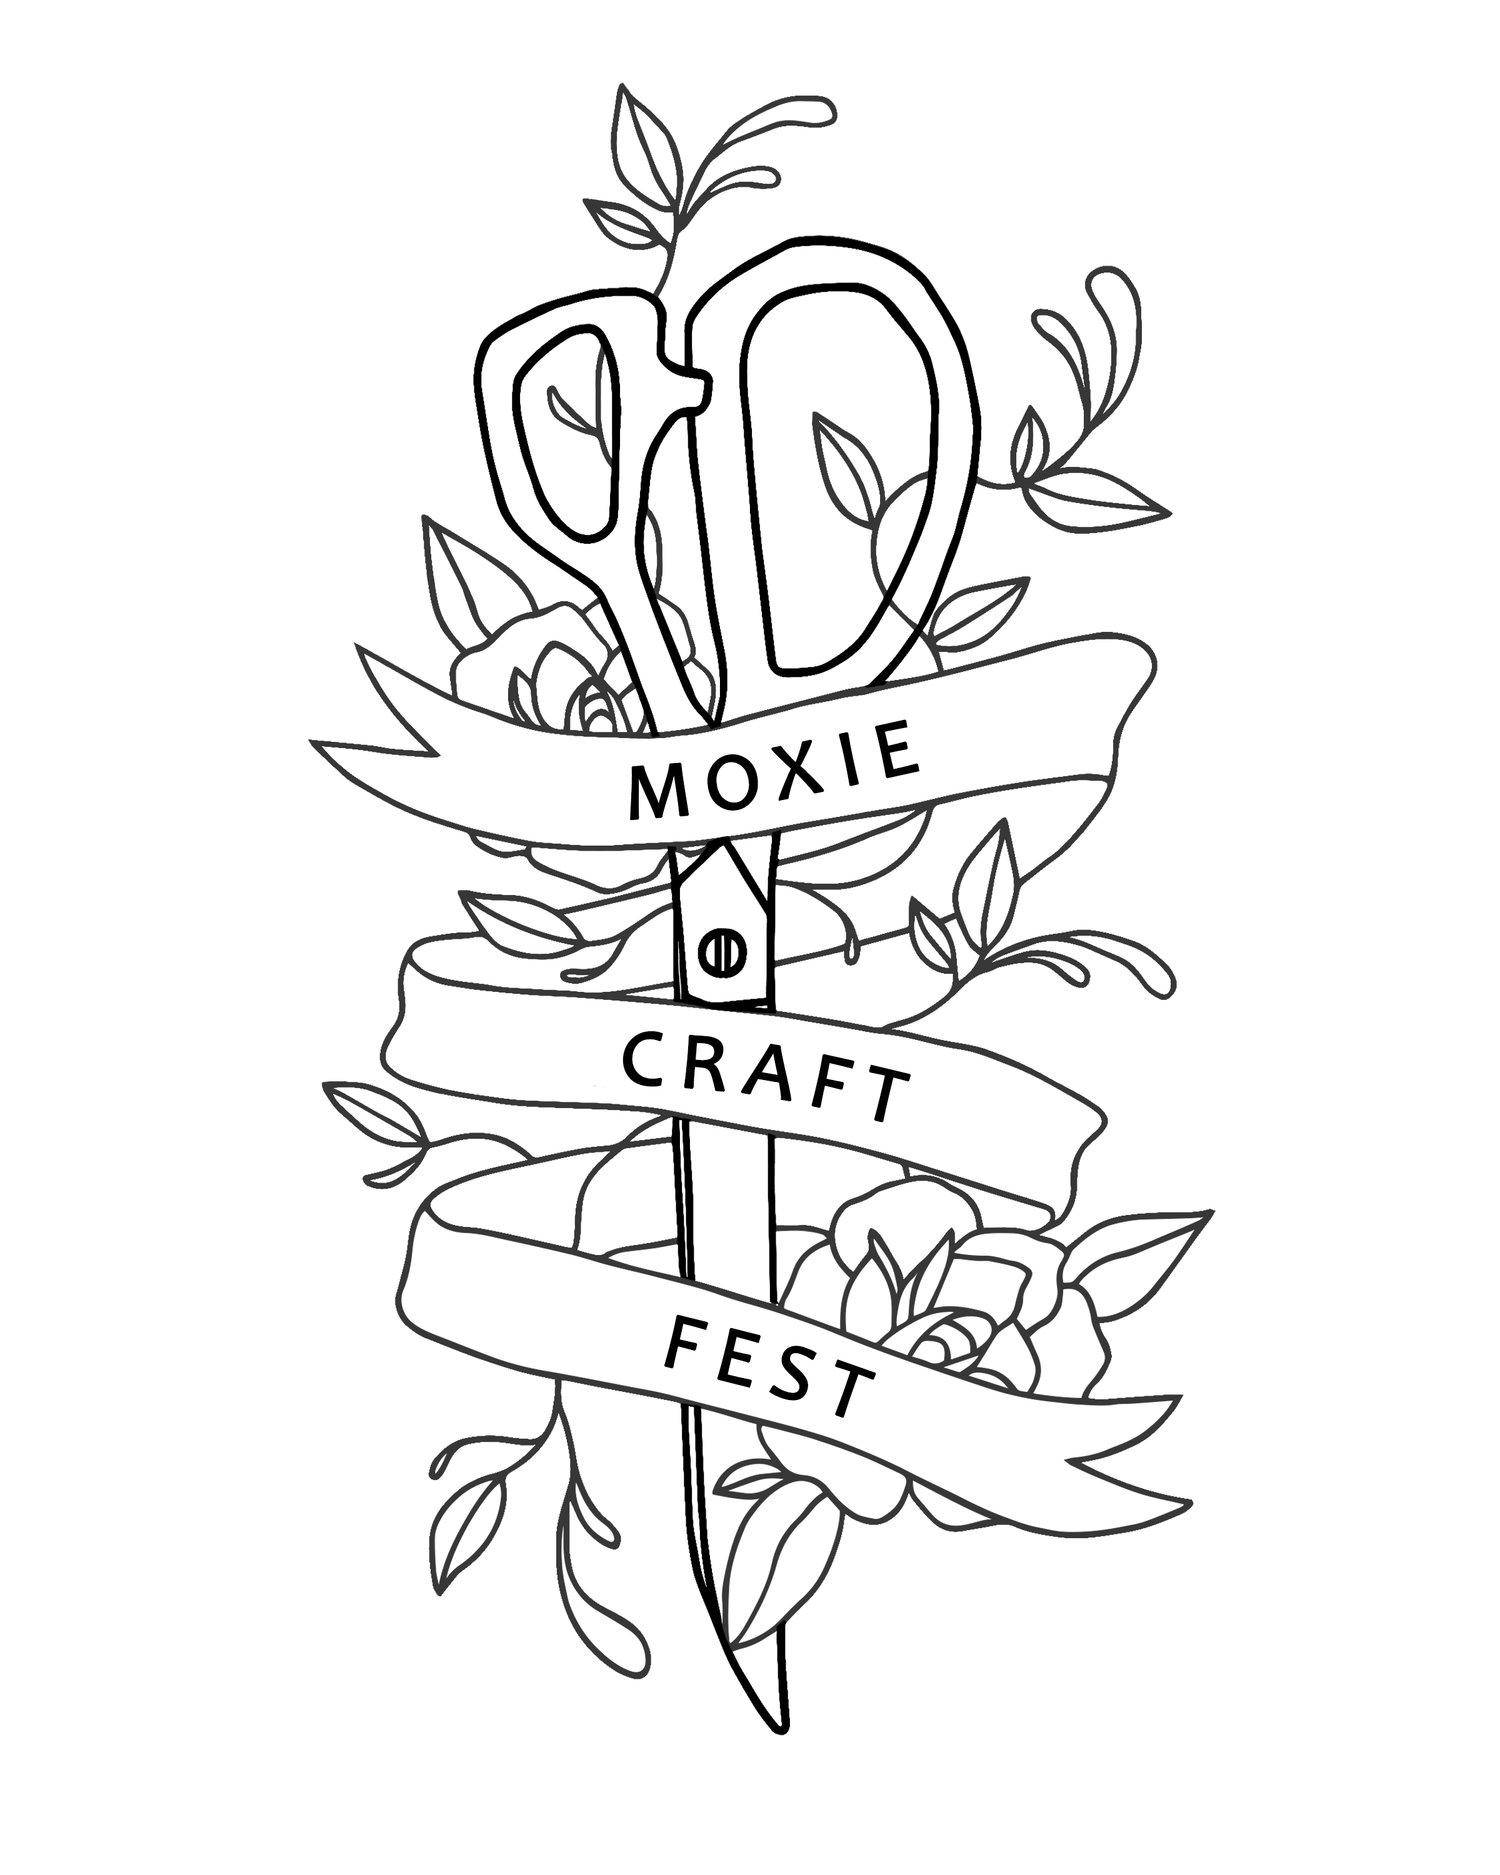 Moxie Craft Fest